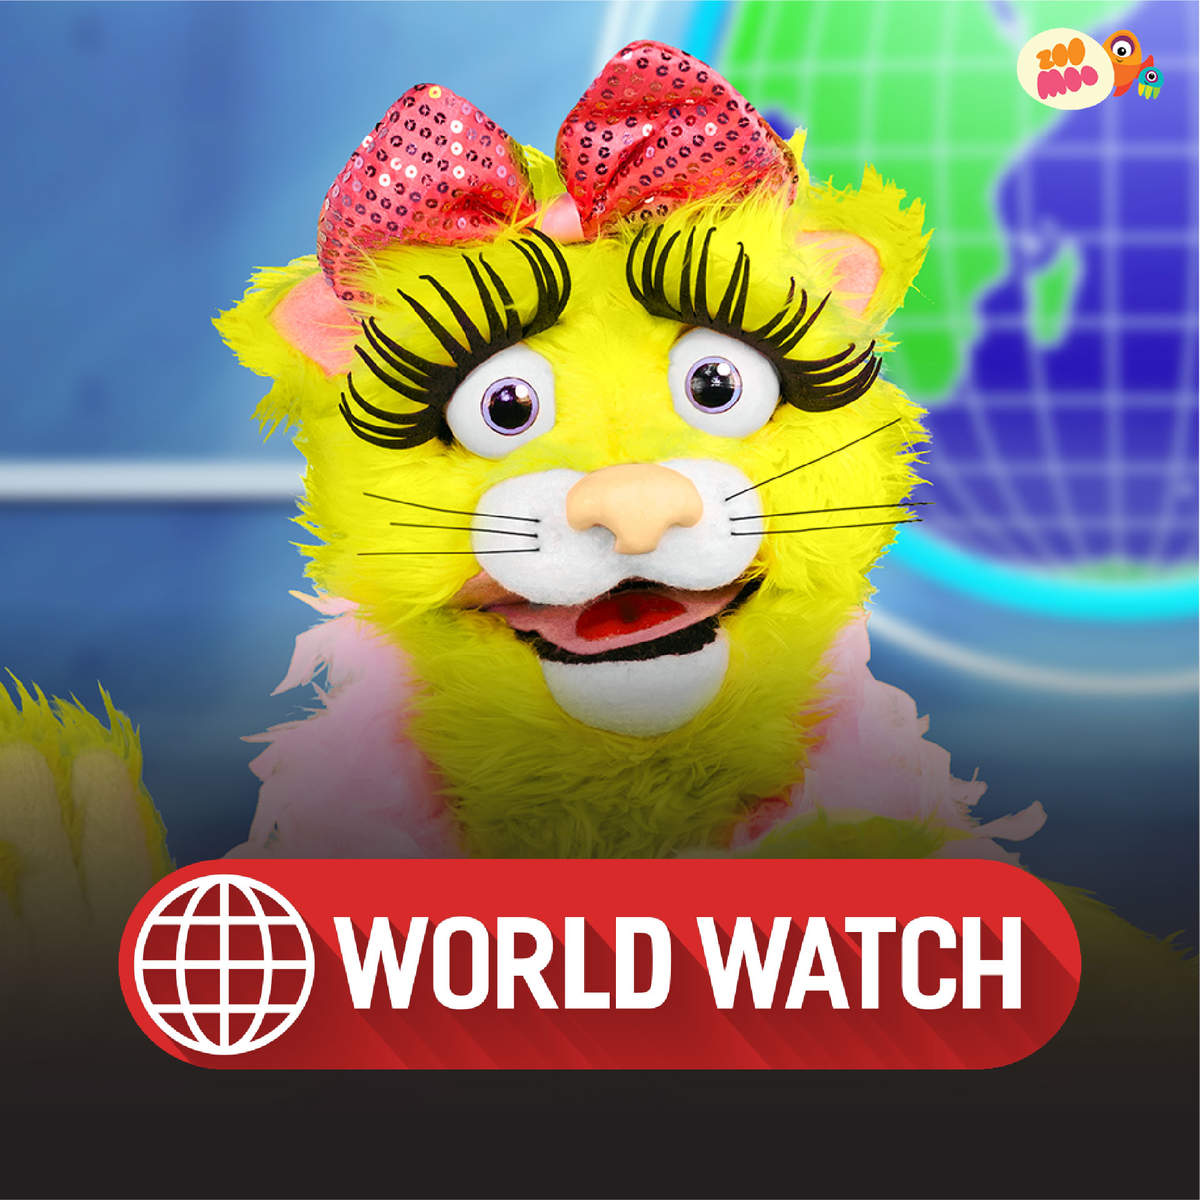 World Watch